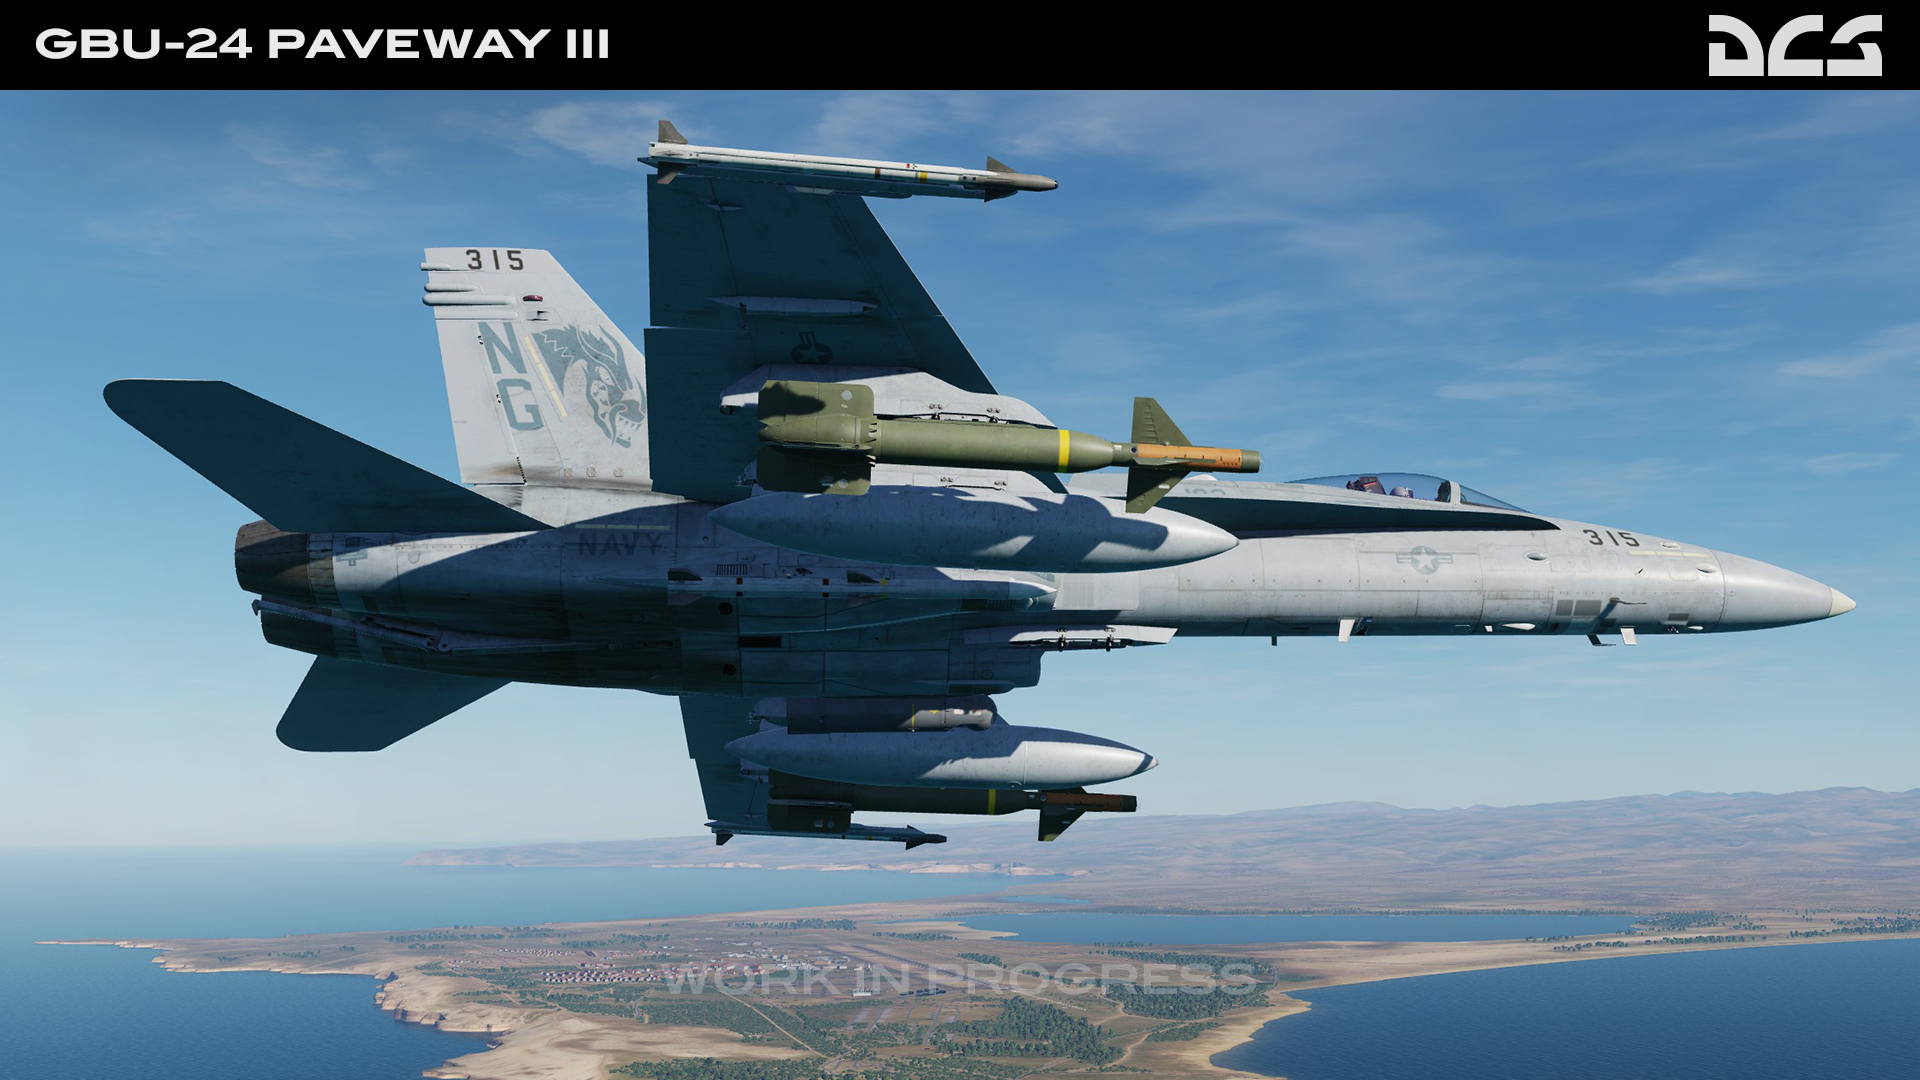 Sign up now for the Microsoft Flight Simulator VR beta - EGM